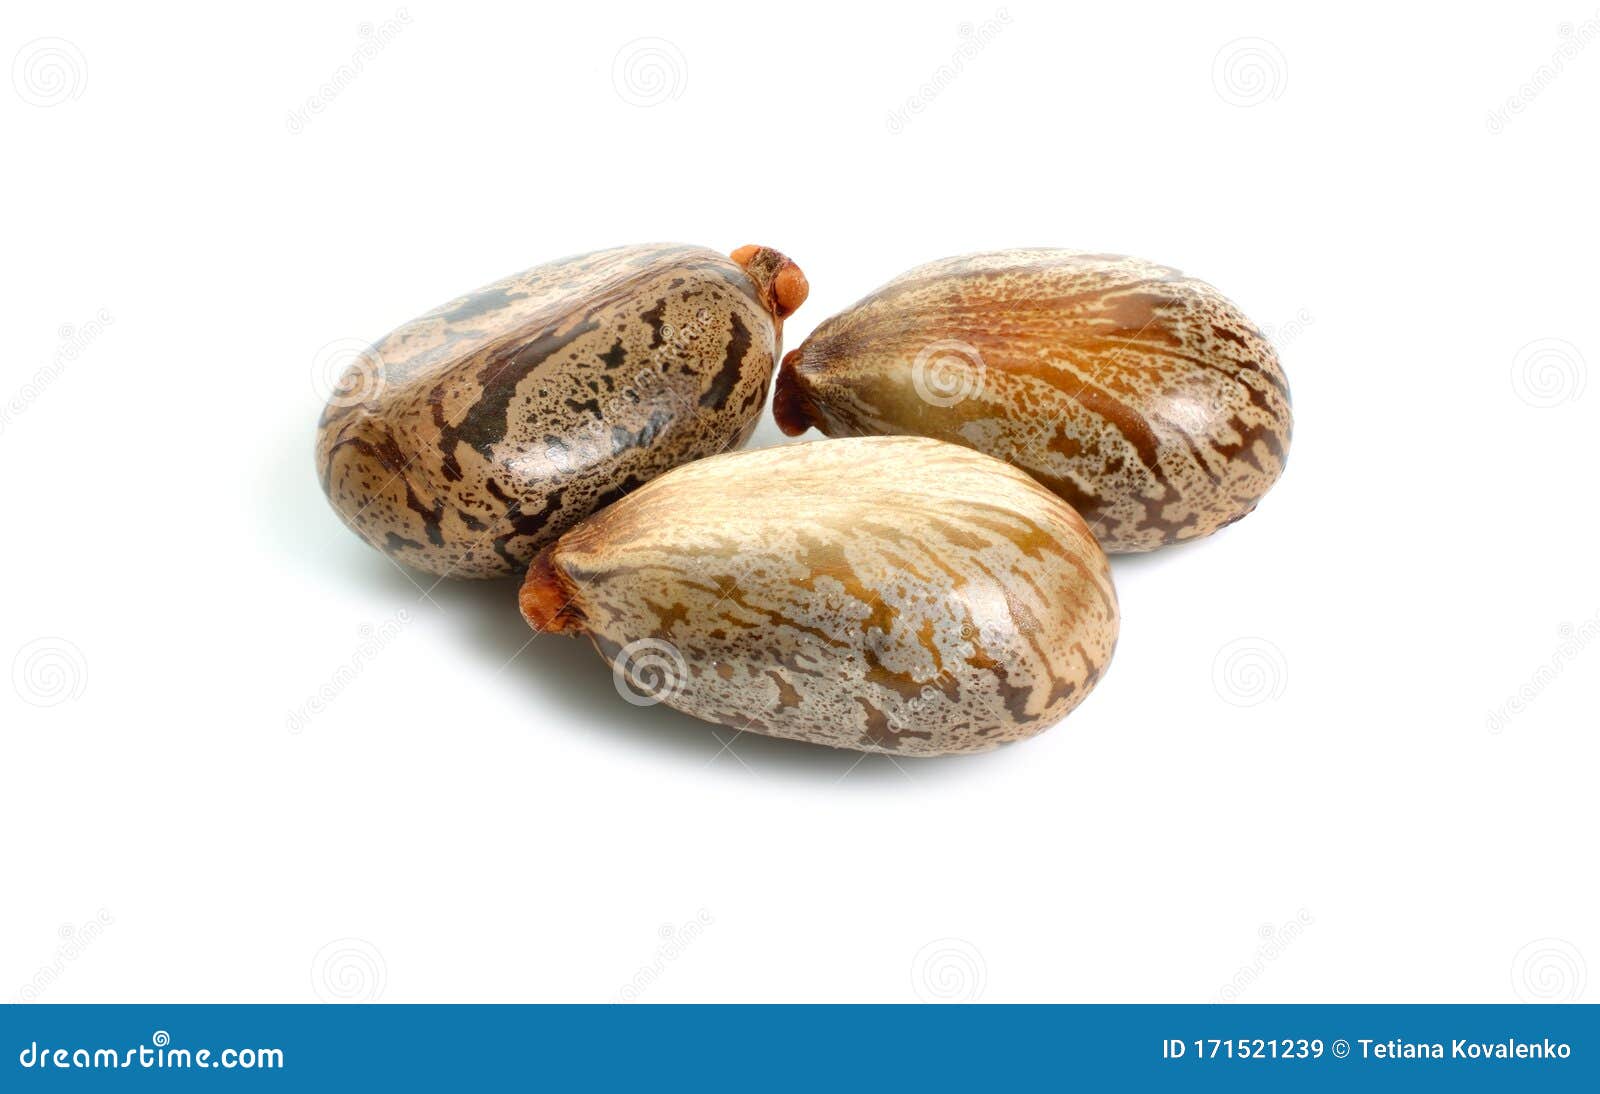 seed of ricinus communis, the castor bean or castor oil plant.  on white background